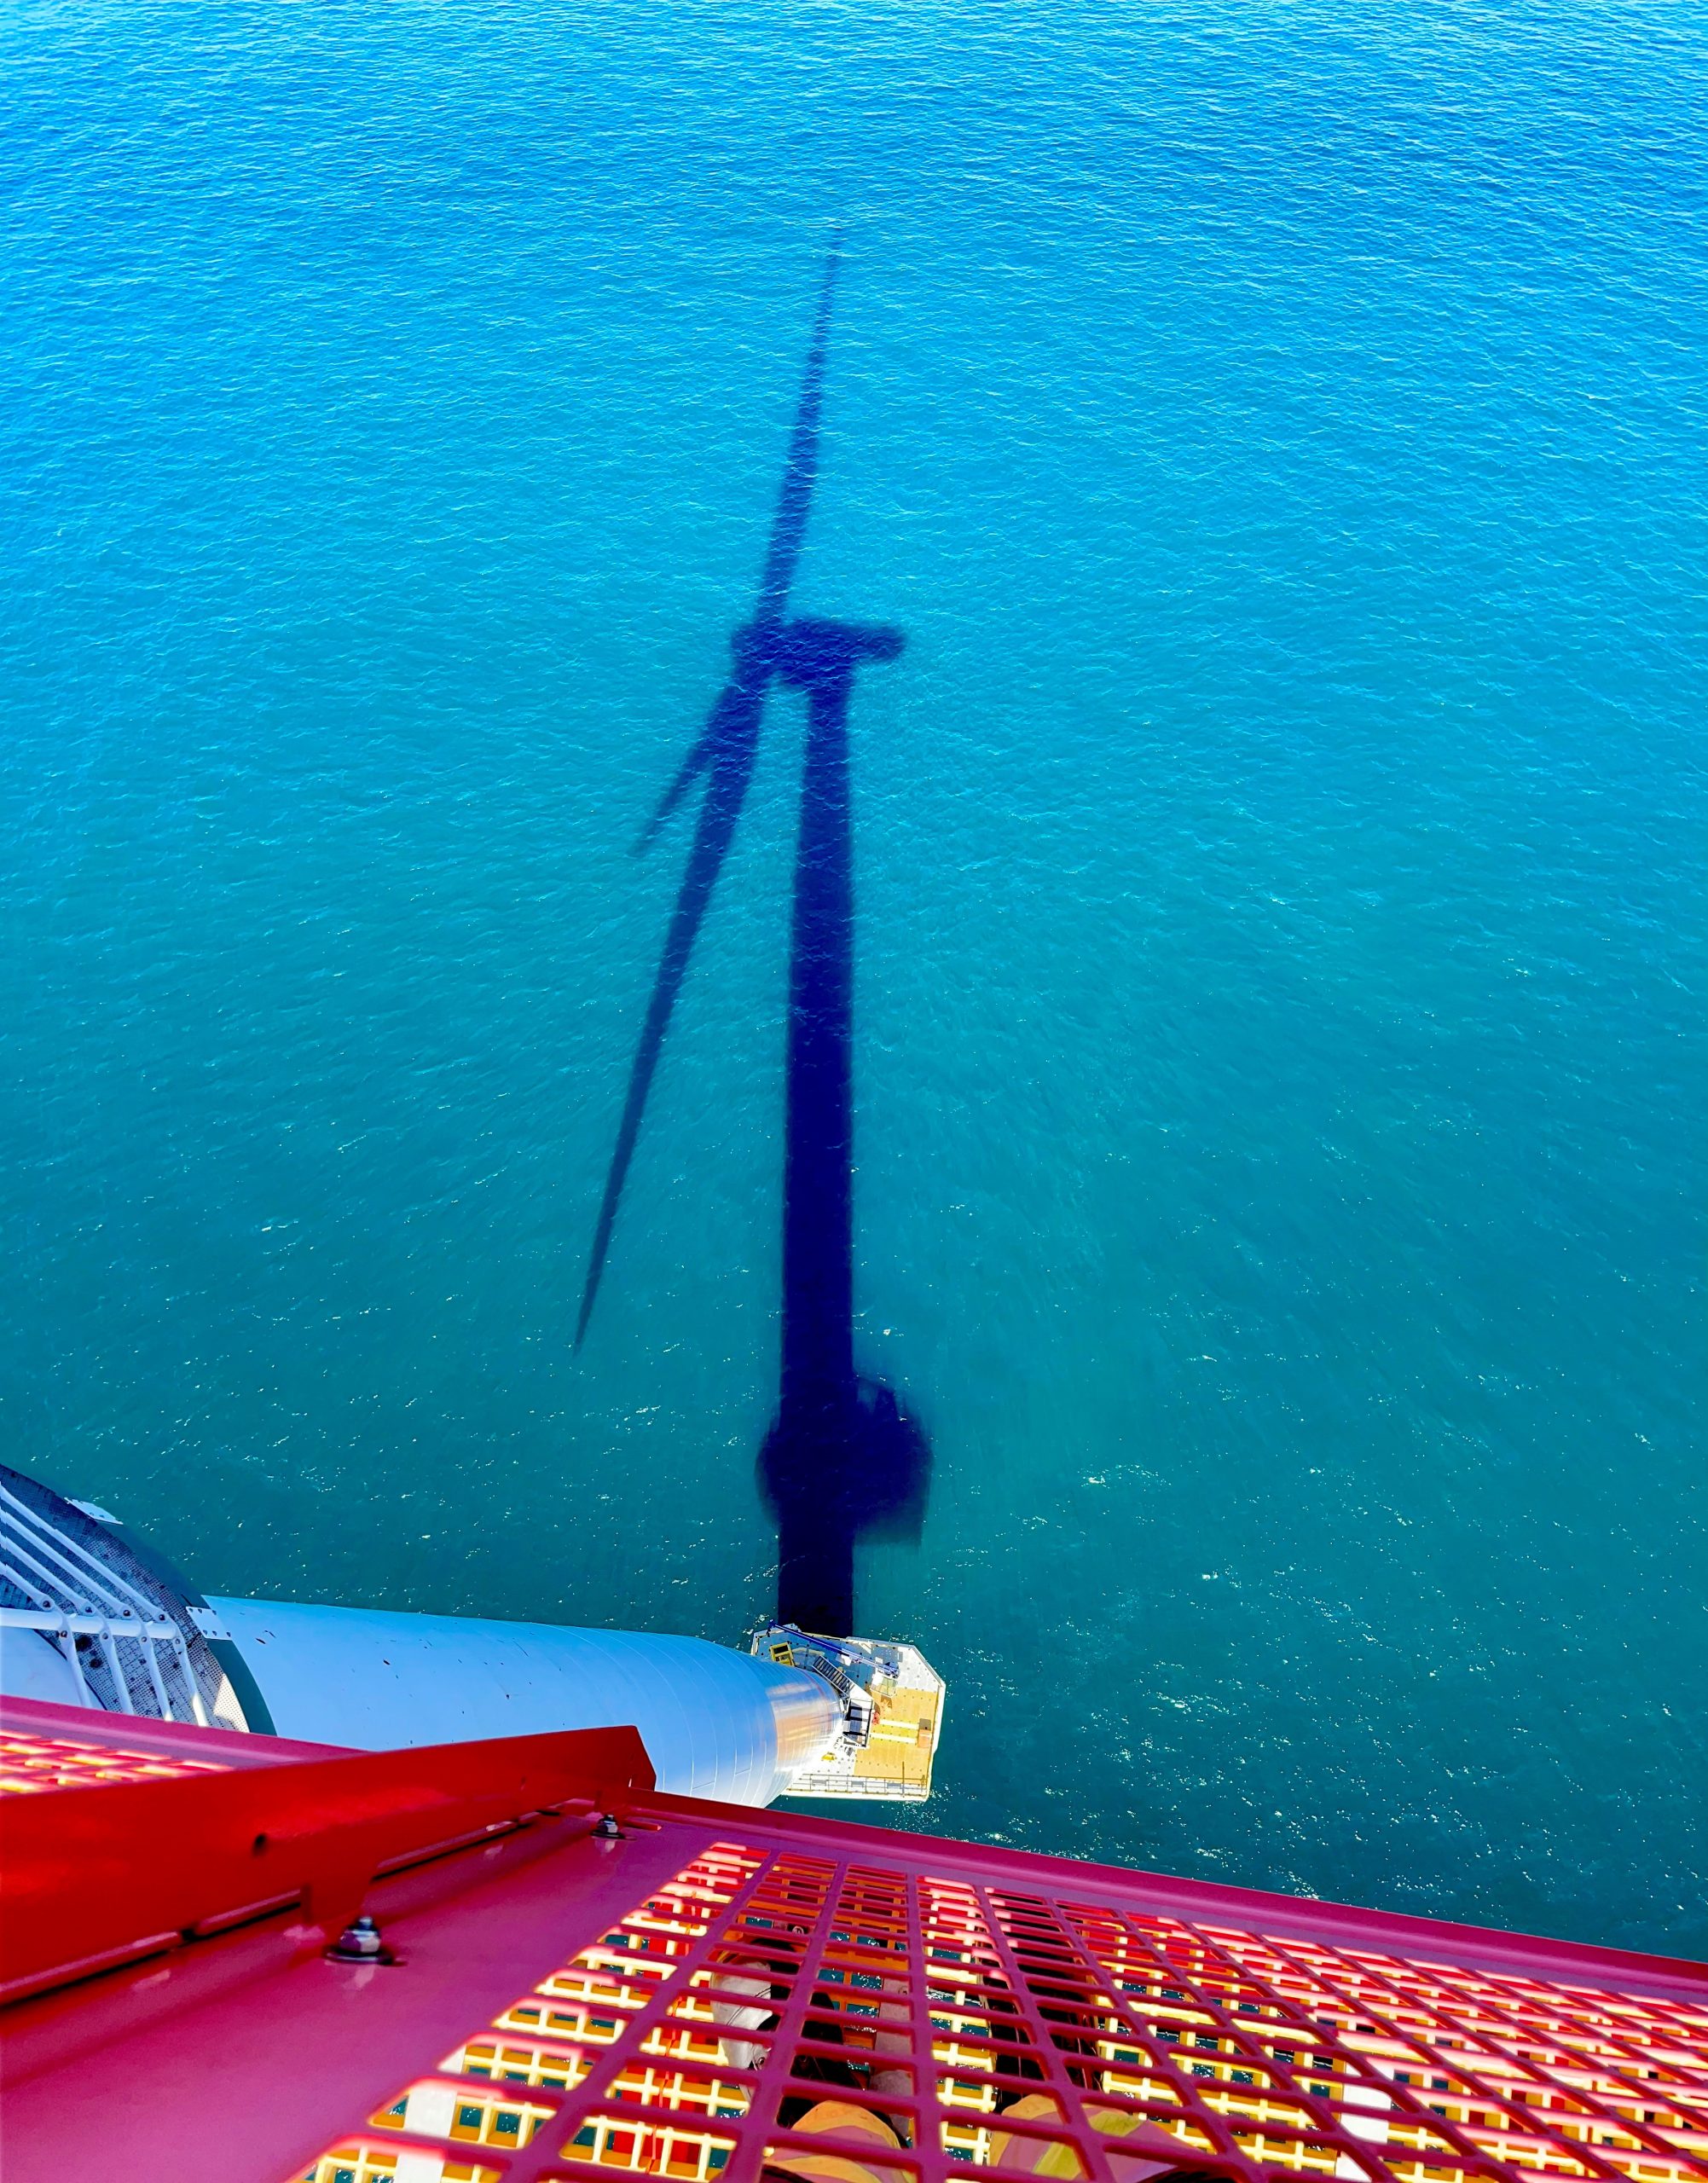 shadow of wind turbine at sea